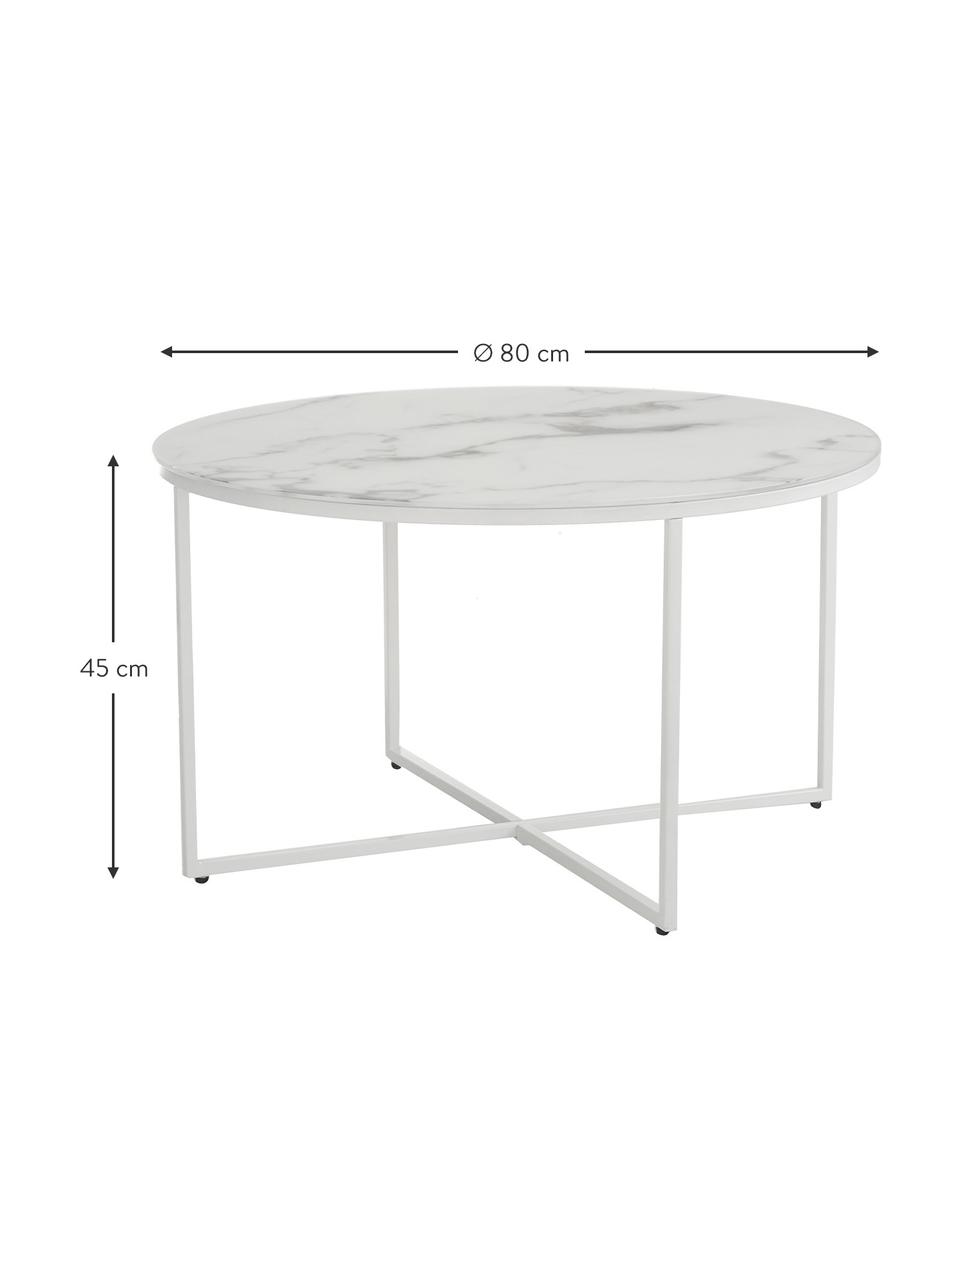 Konferenční stolek s mramorovanou skleněnou deskou Antigua, Bílošedá mramorovaná, bílá, Ø 80 cm, V 45 cm